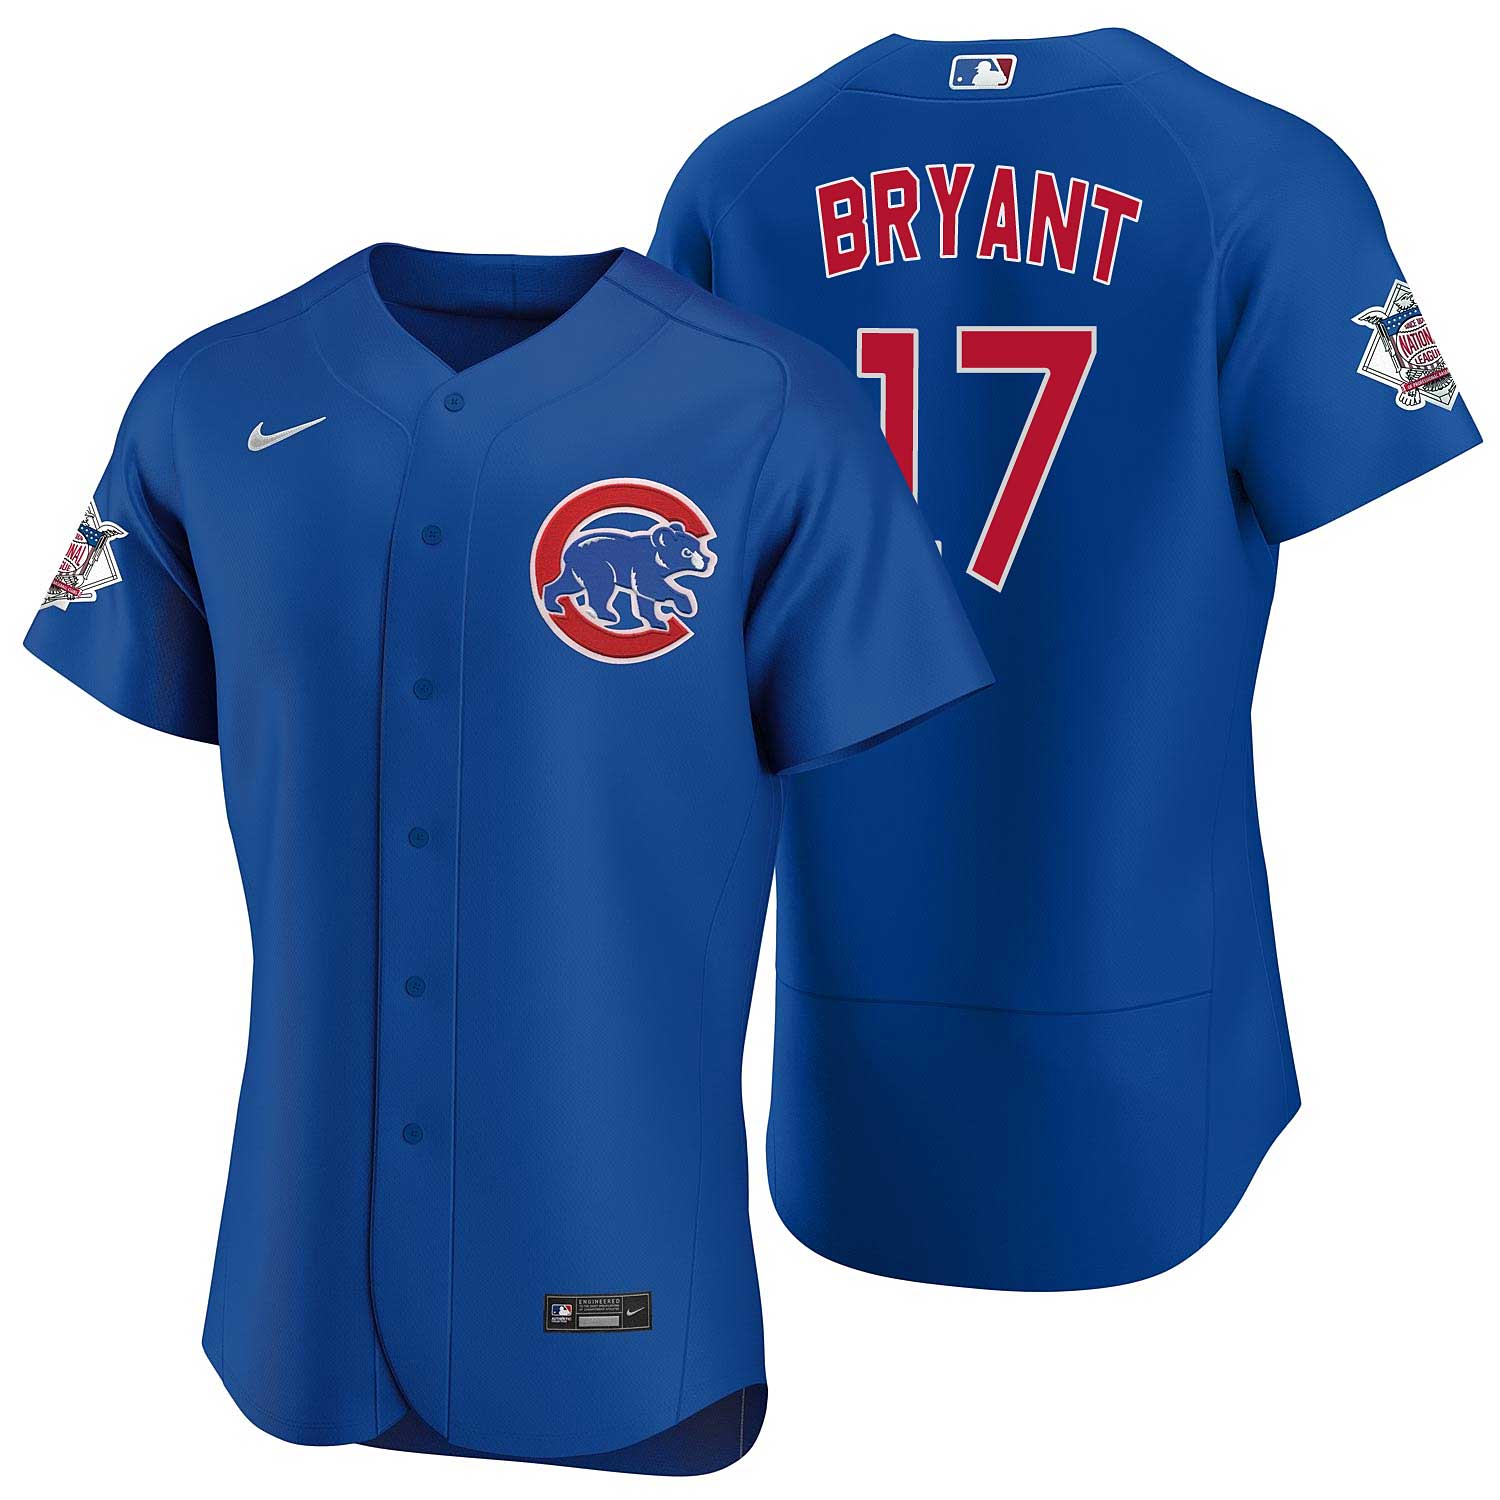 Cubs' Kris Bryant has baseball's most popular jersey